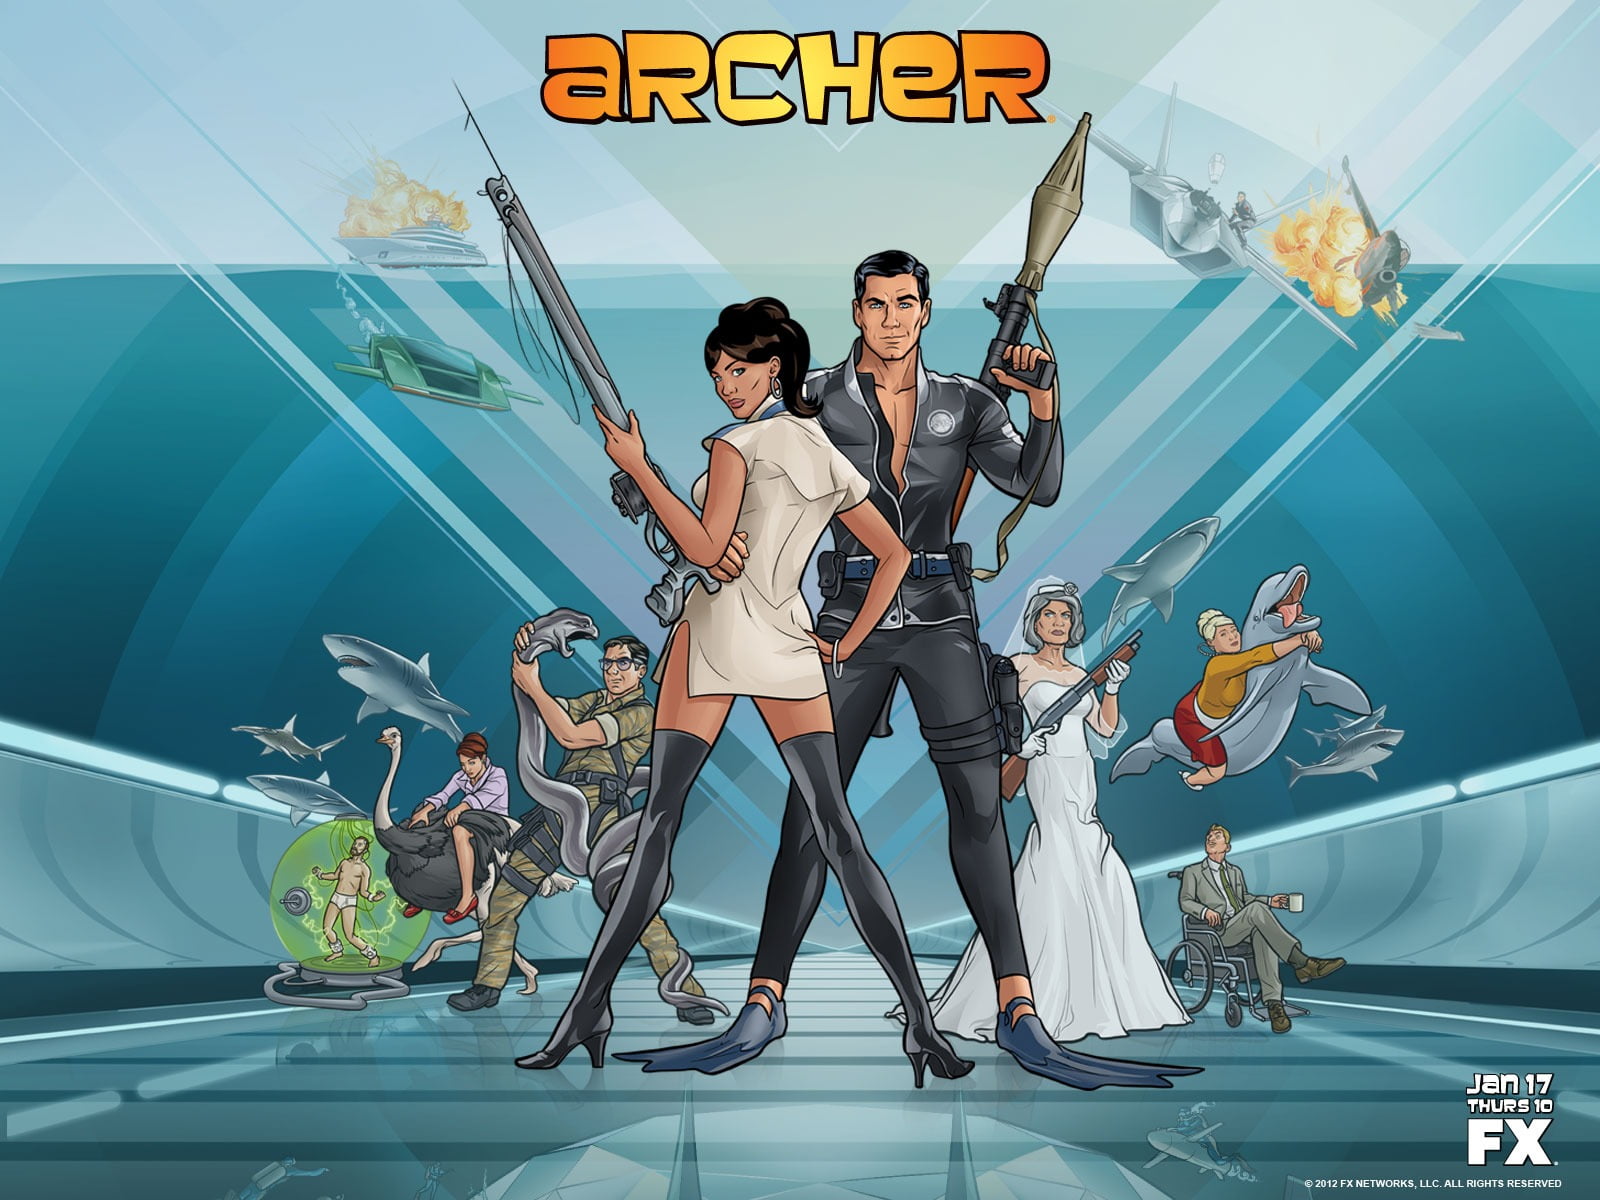 videogame screenshot, Archer (TV show), men, full length, young men